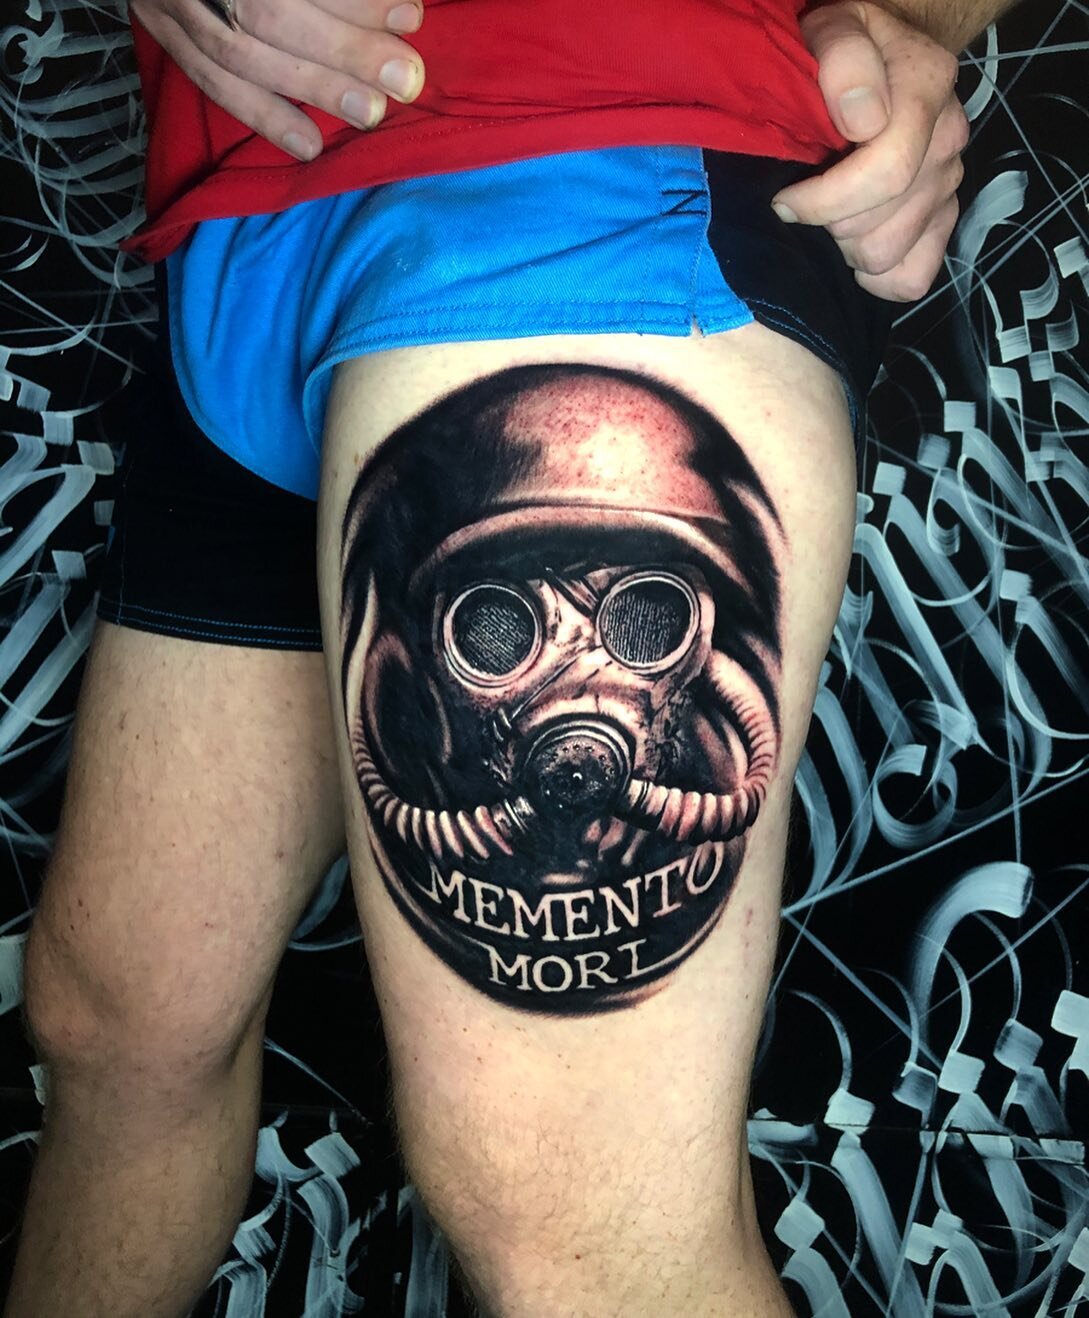 The Sweet Life Tattoo Shop  Eddie tattoo done on Jason thanks buddy